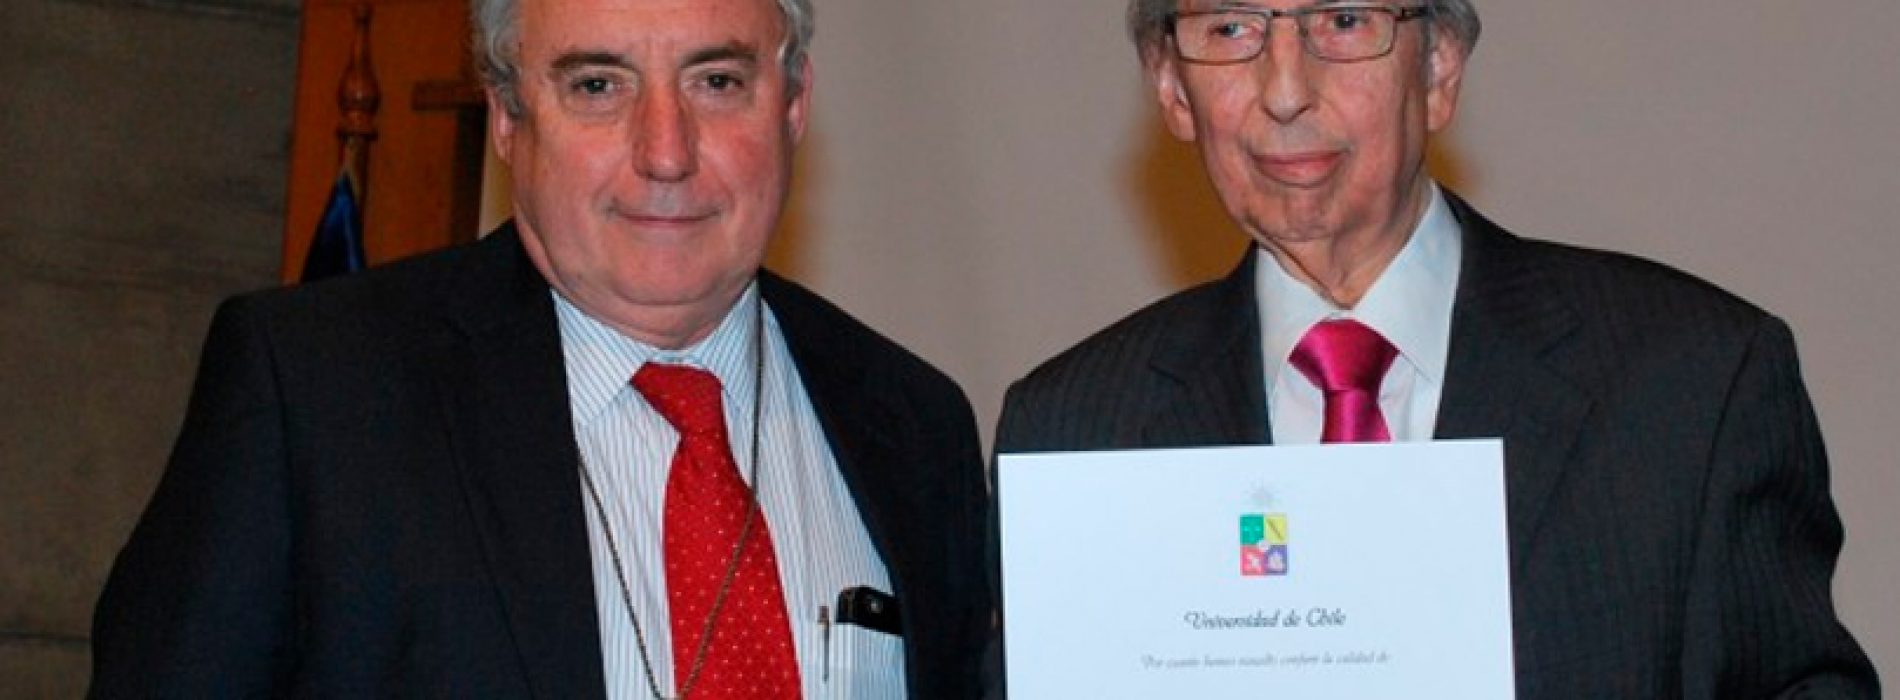 Universidad de Chile distingue al académico Jorge Valenzuela Pedevila como Profesor Emérito